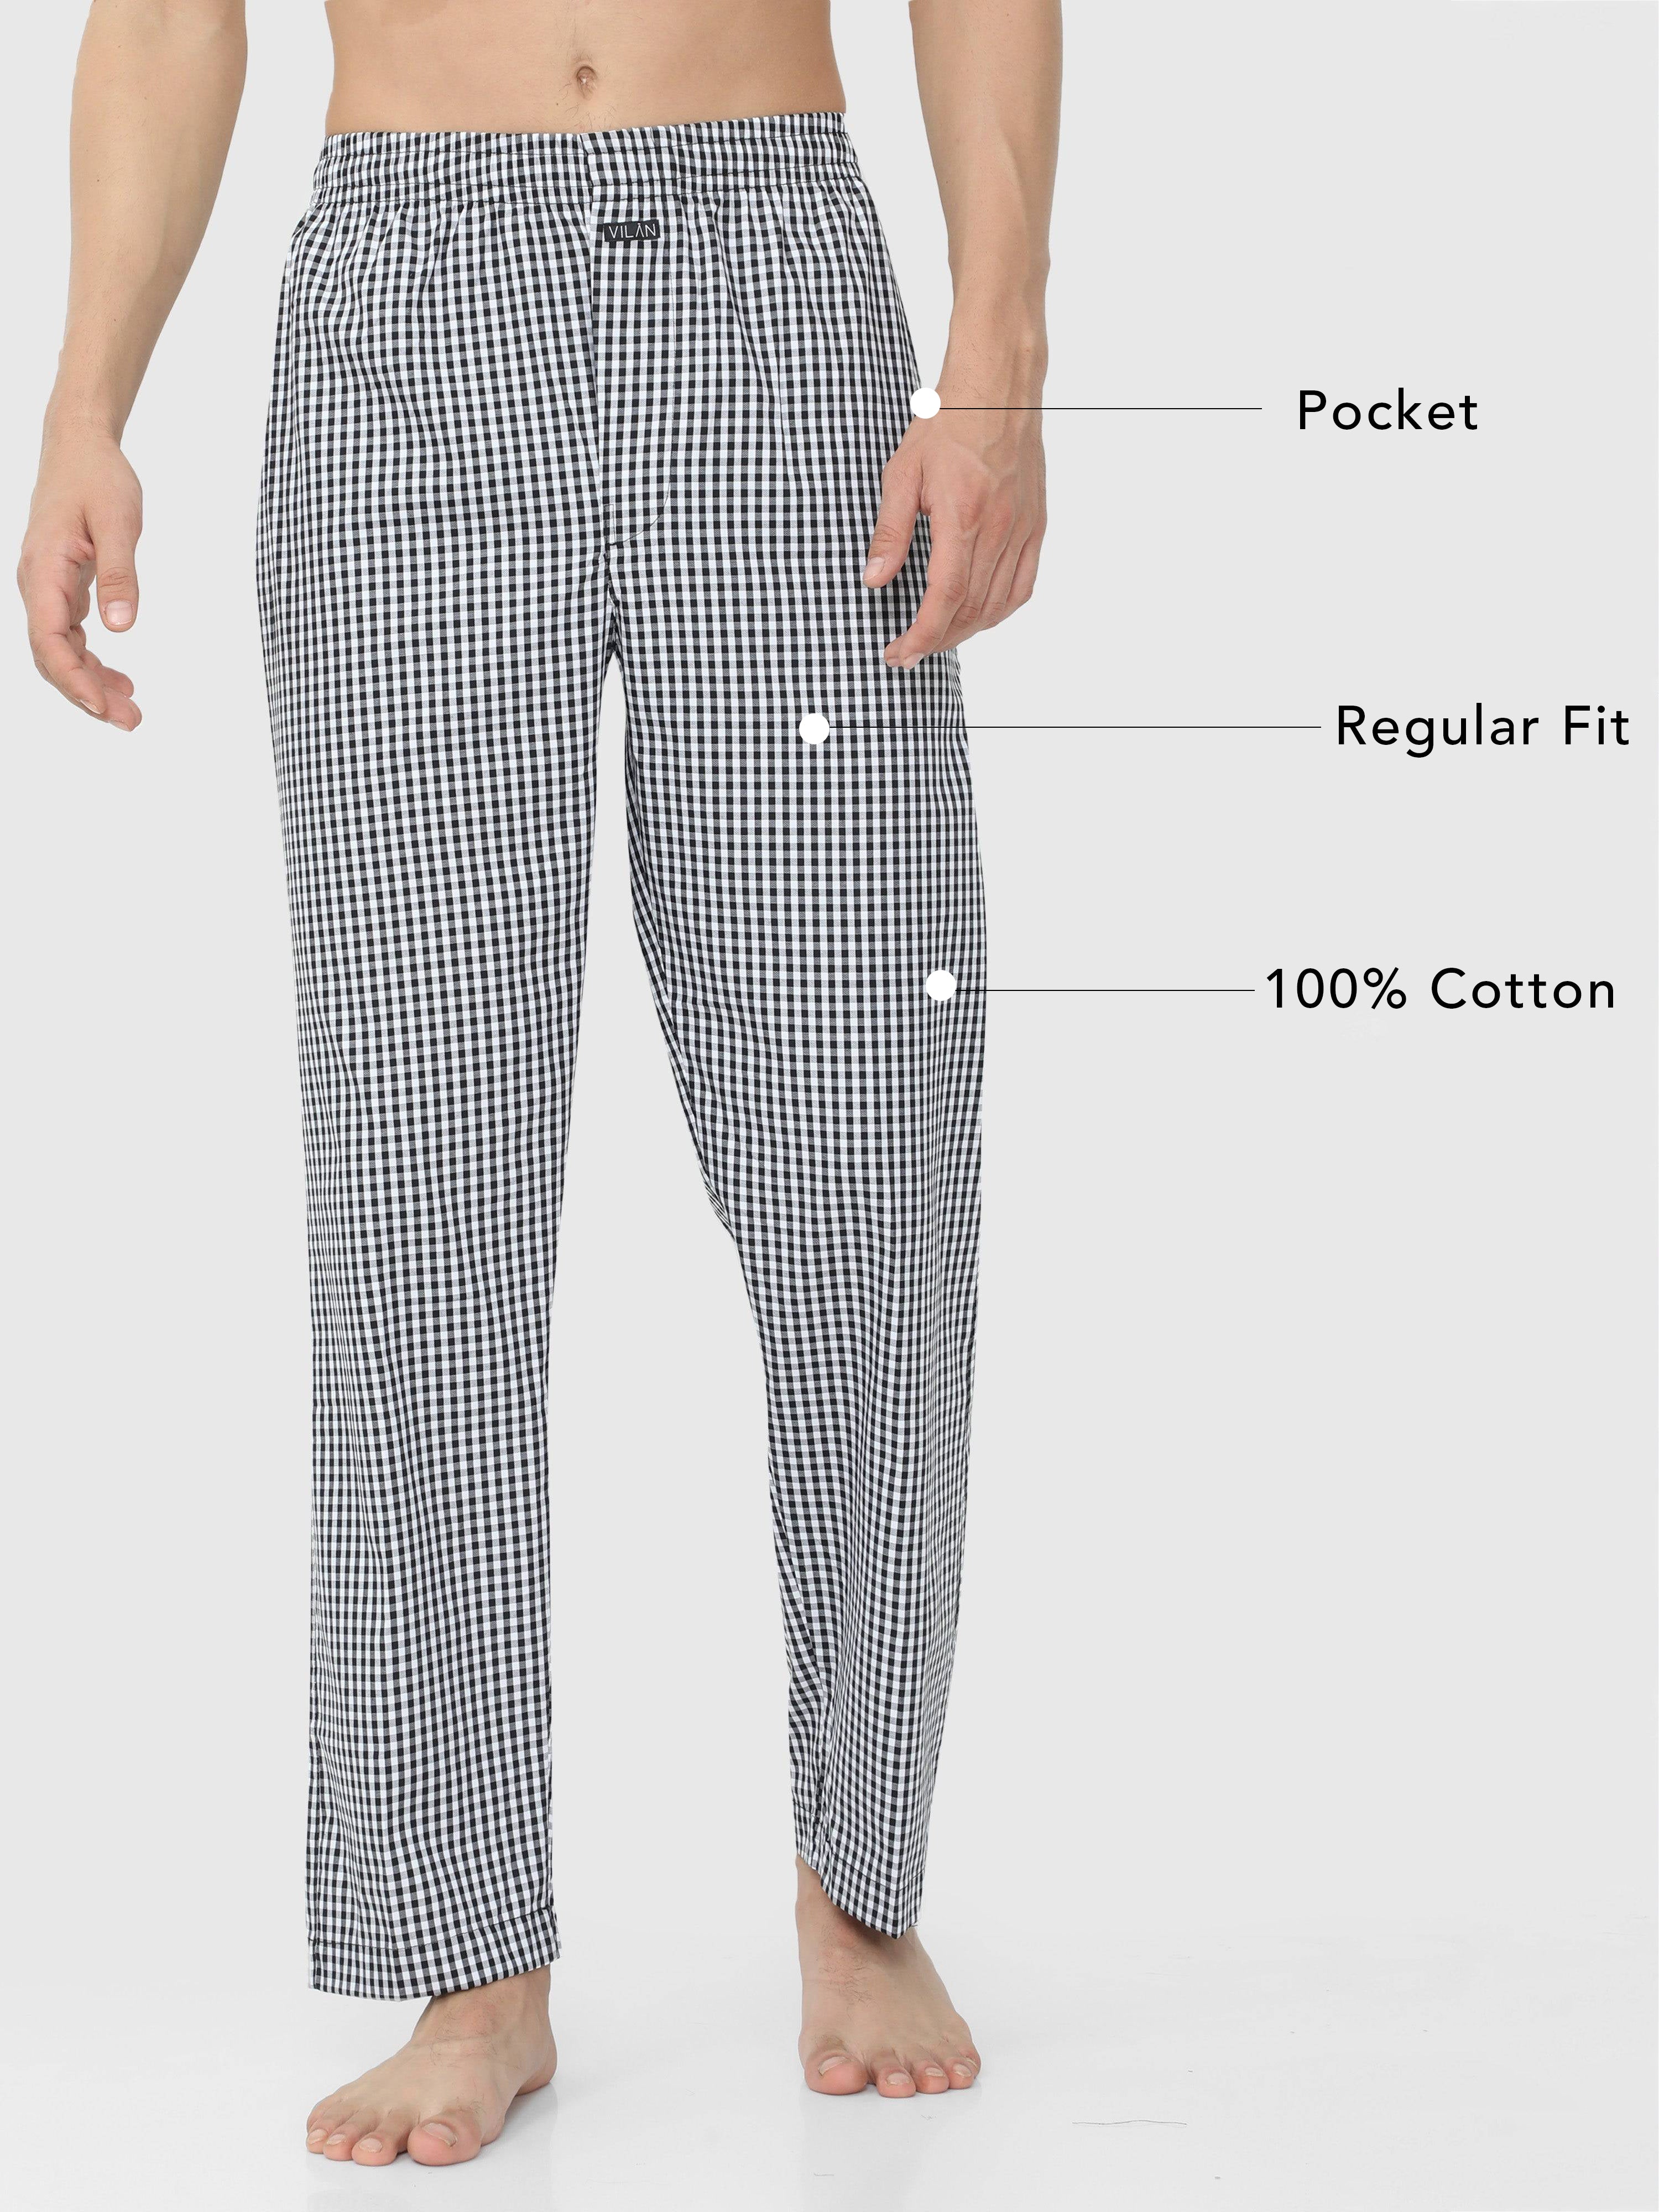 Buy Mens Combo Pack of 2 Lounge Pants  Cream  Grey  GSM170  Free Size  Online on Brown Living  Mens Pyjama